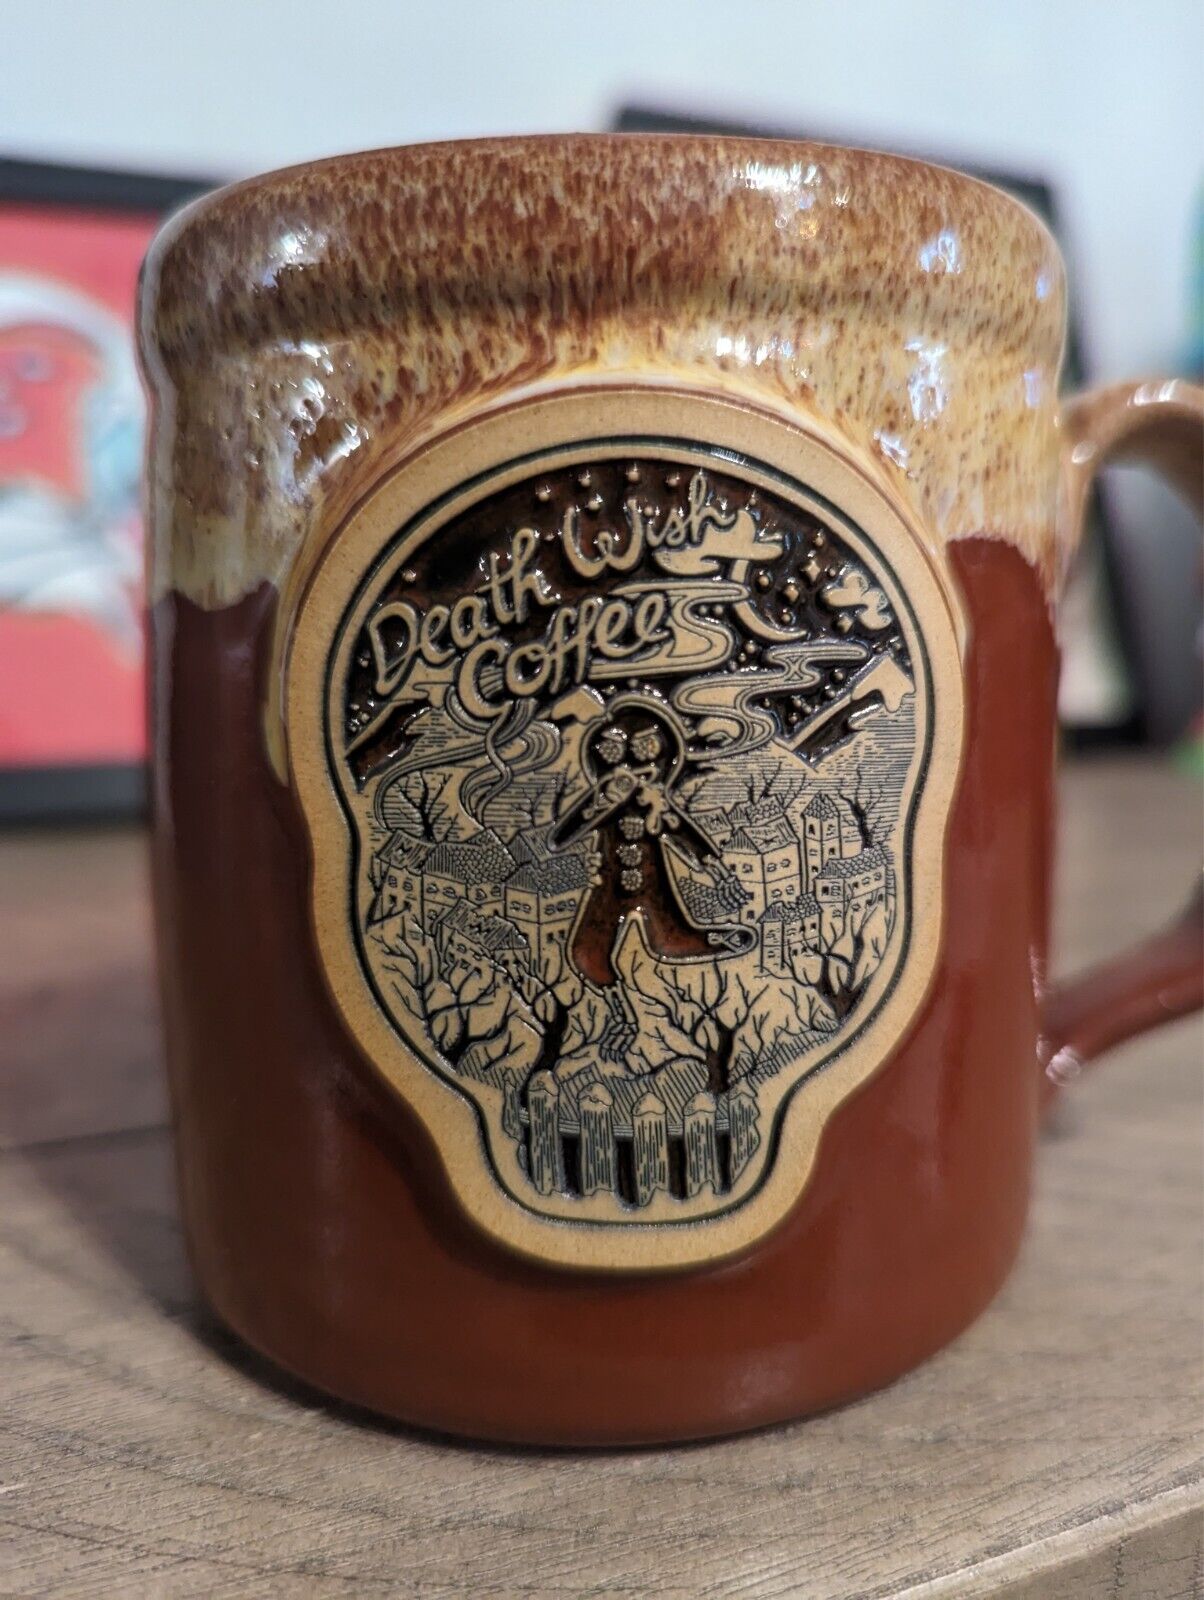 Death Wish Ceramic Coffee Mug - 2021 Ginger Dead - #2665/4000 - Limited Edition